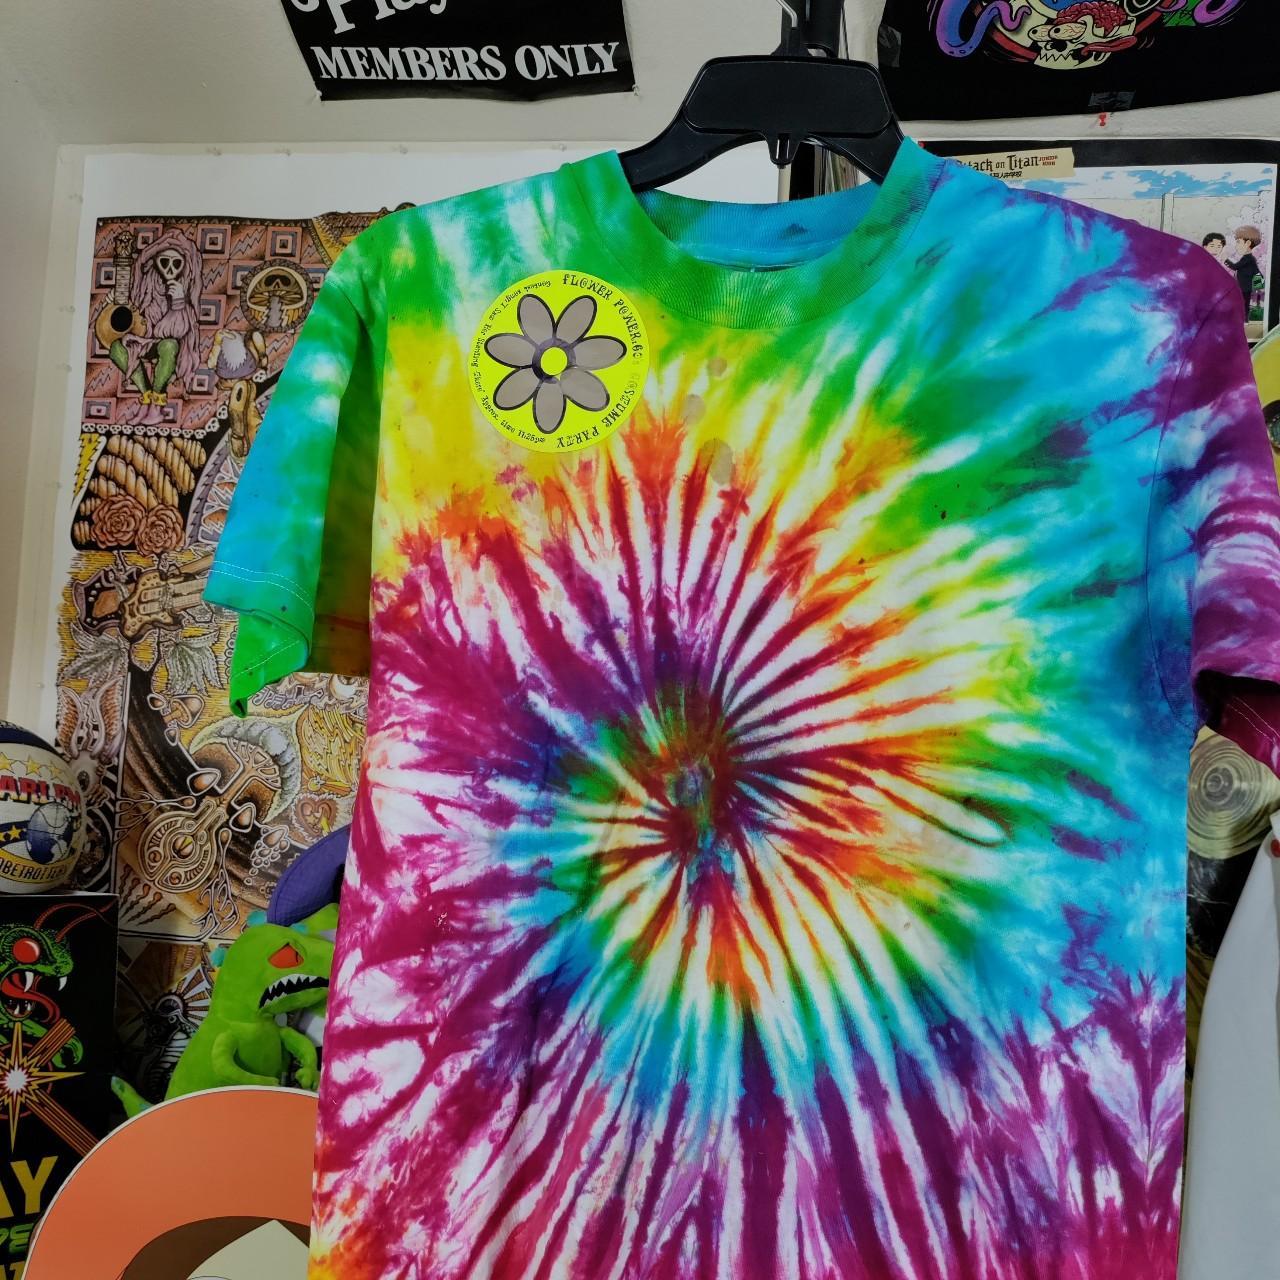 Be Kind Tie Dye Shirt,Tie dye Be Kind Print Tee Shirt Sticker for